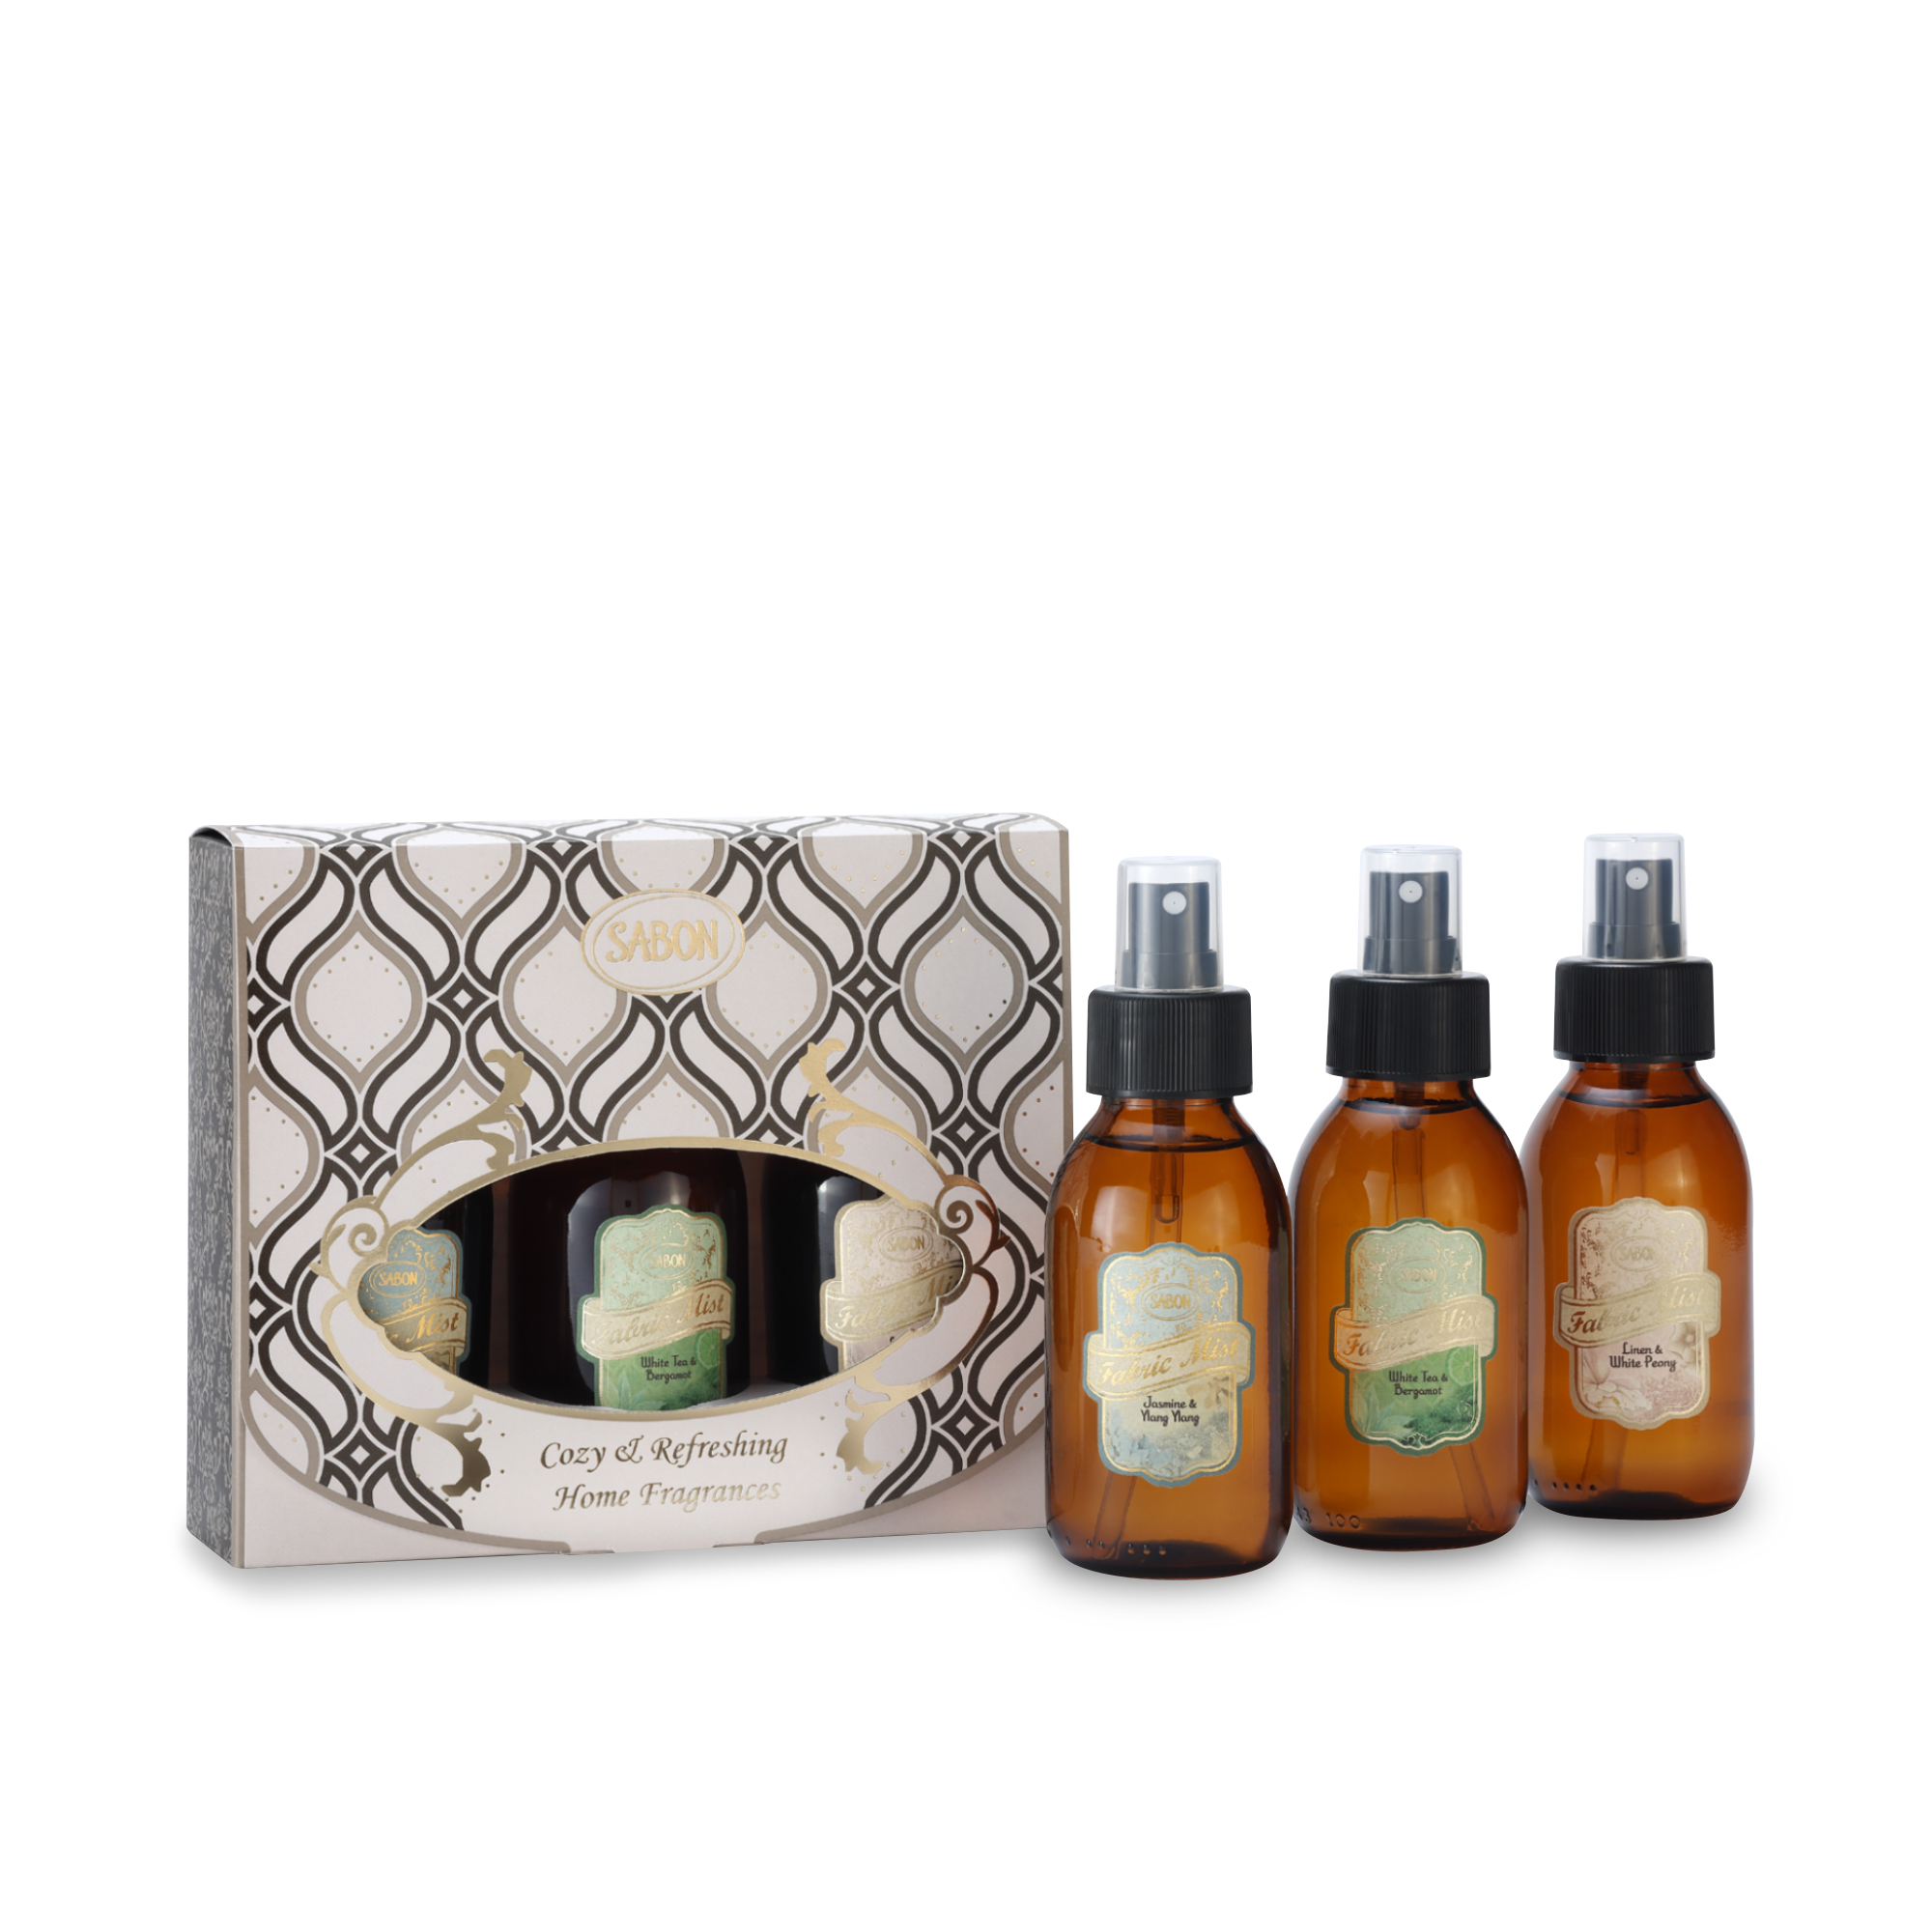 Cozy & Refreshing Home Fragrances Gift Set